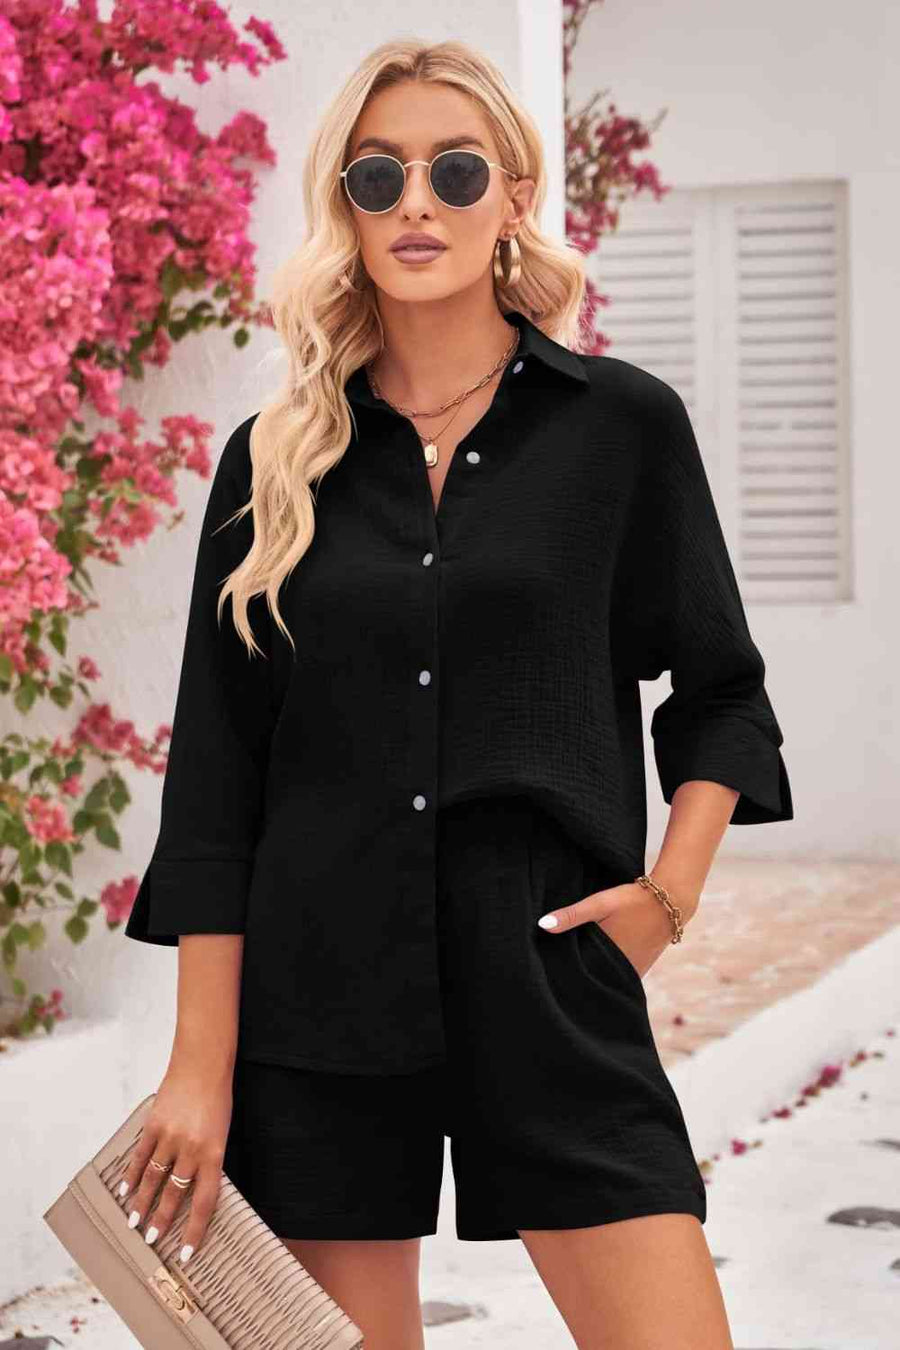 ohyeah Faux Leather Lingerie Bodysuit for Women Plus Size Teddy Lingerie  Set with Garter Belt Leotard Nightwear : : Clothing, Shoes &  Accessories